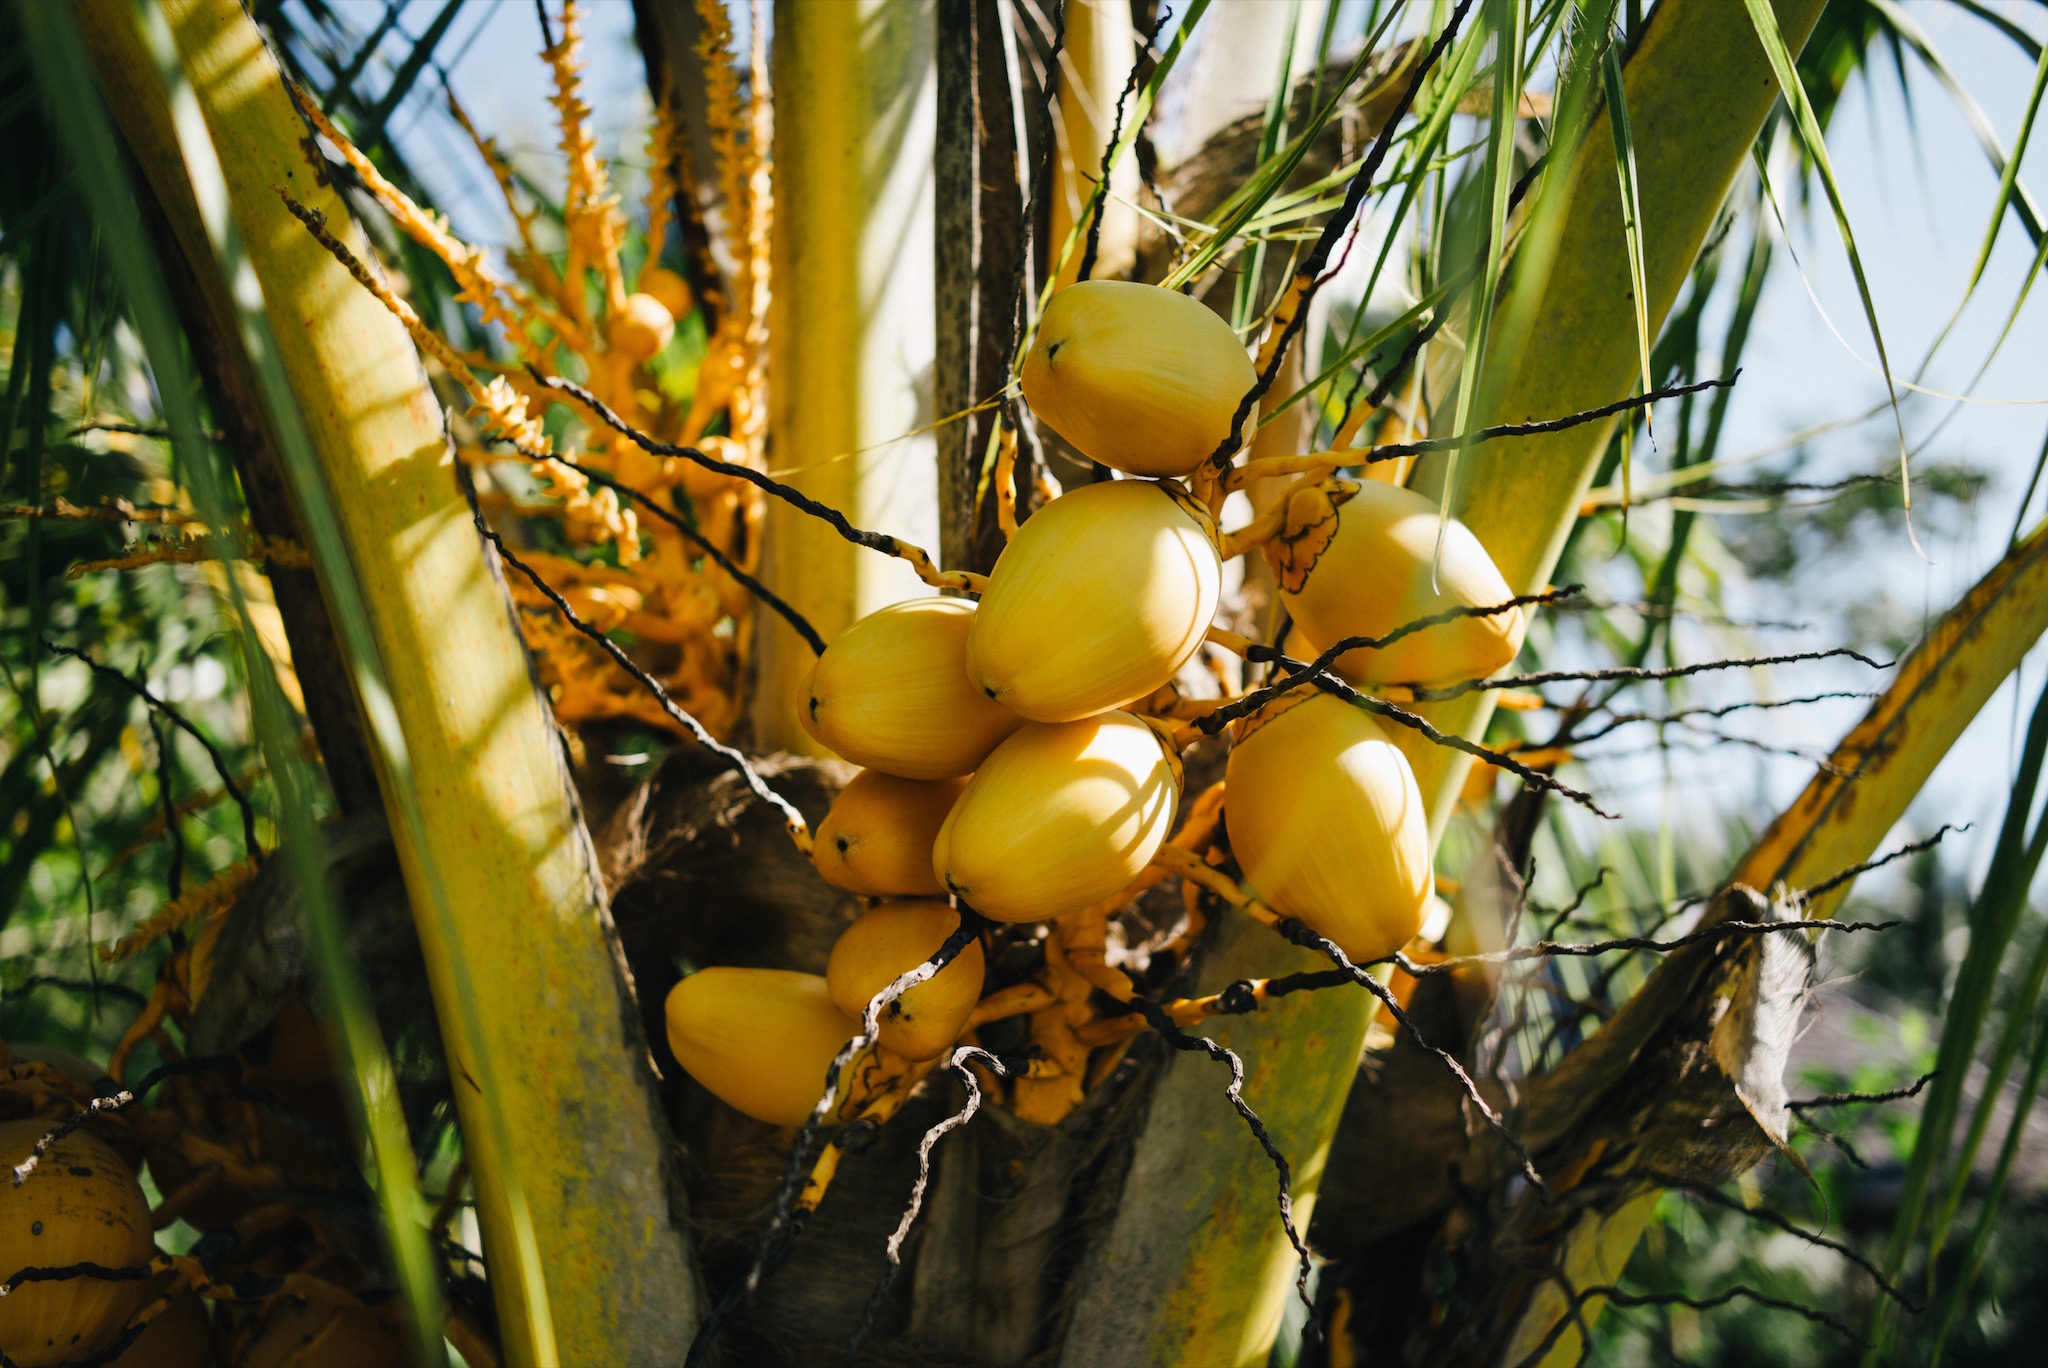  Yellow coconuts growing between the villas. 